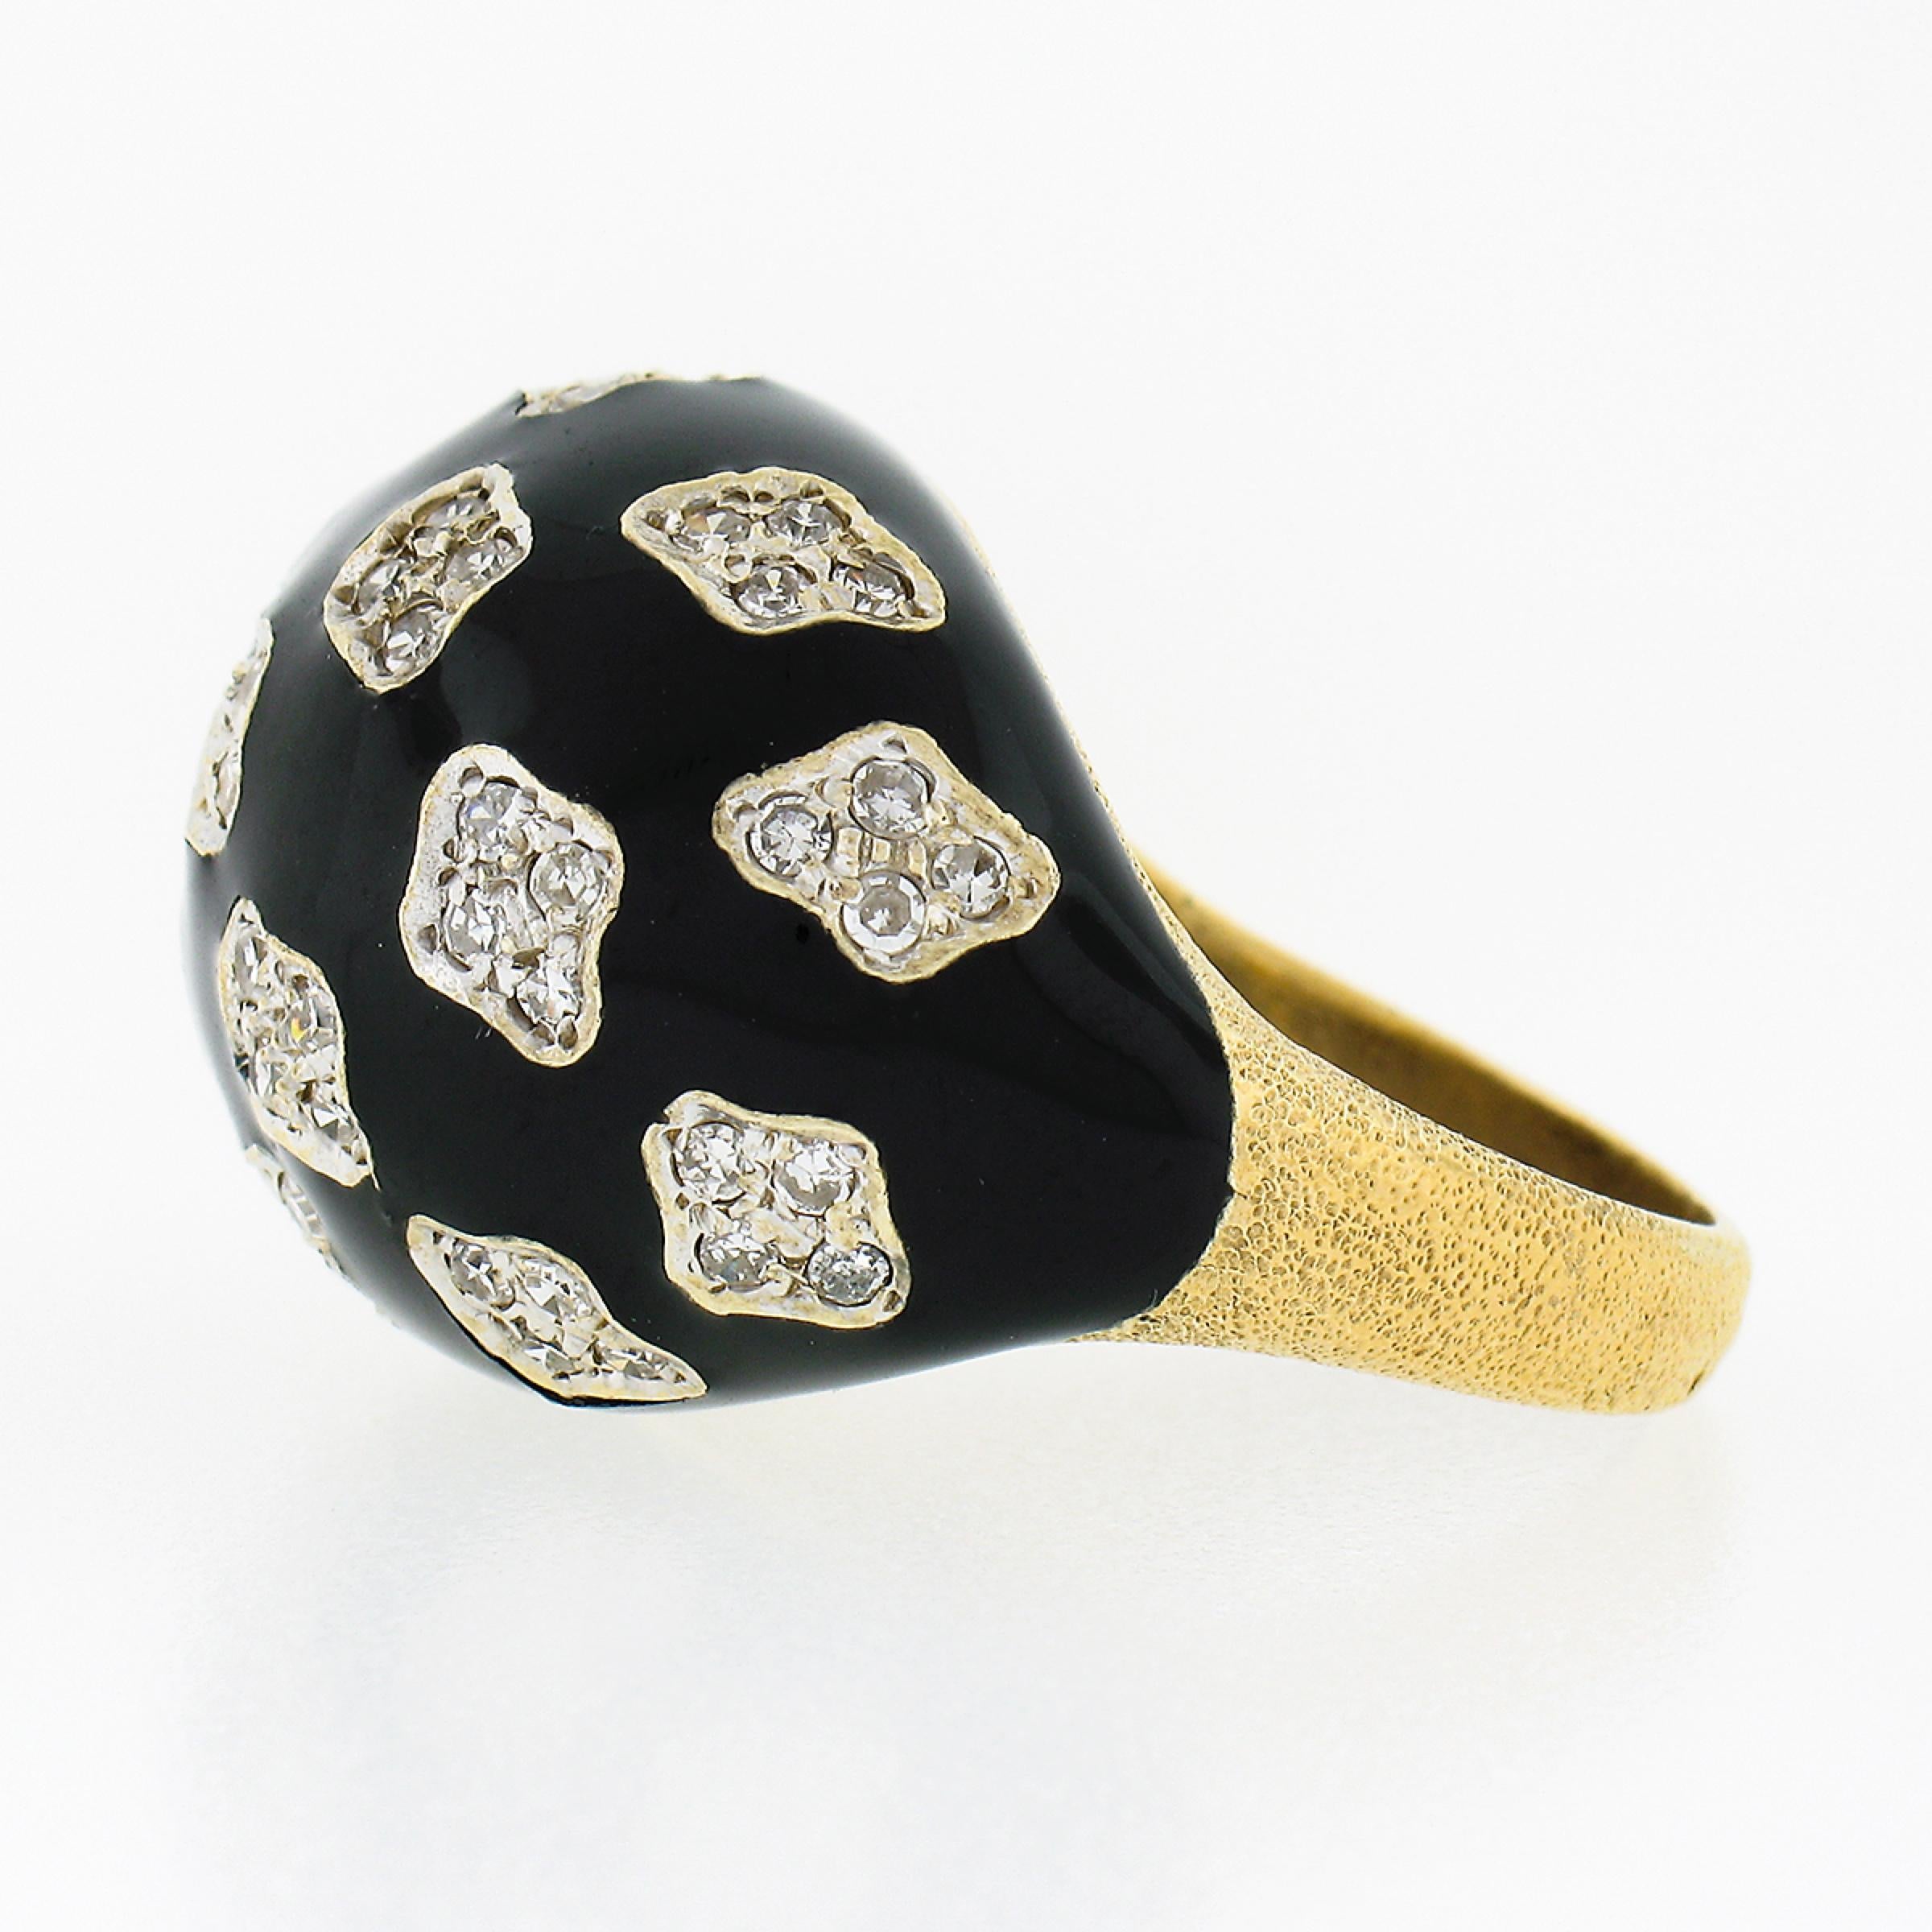 Vintage 18k TT Gold 0.90ct Pave Diamond Clusters on Black Enamel Dome Bombe Ring For Sale 1